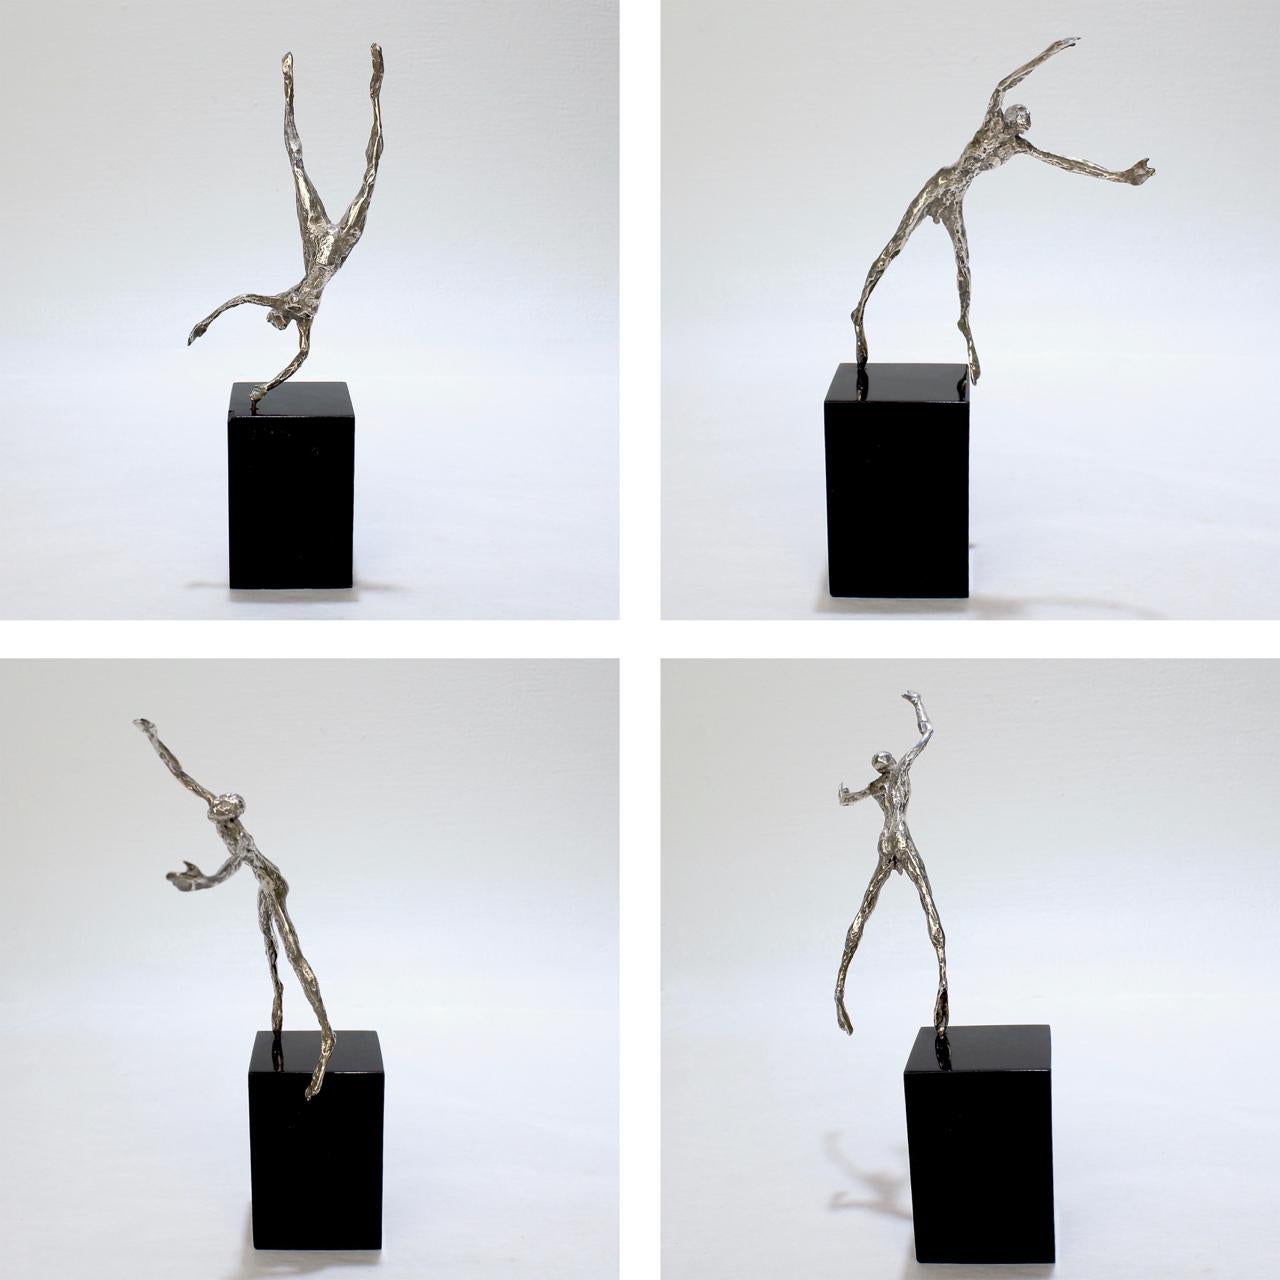 2 Stanley Bleifeld 800 Silver Sculptures Depicting Adam & Eve's Fall from Grace 2